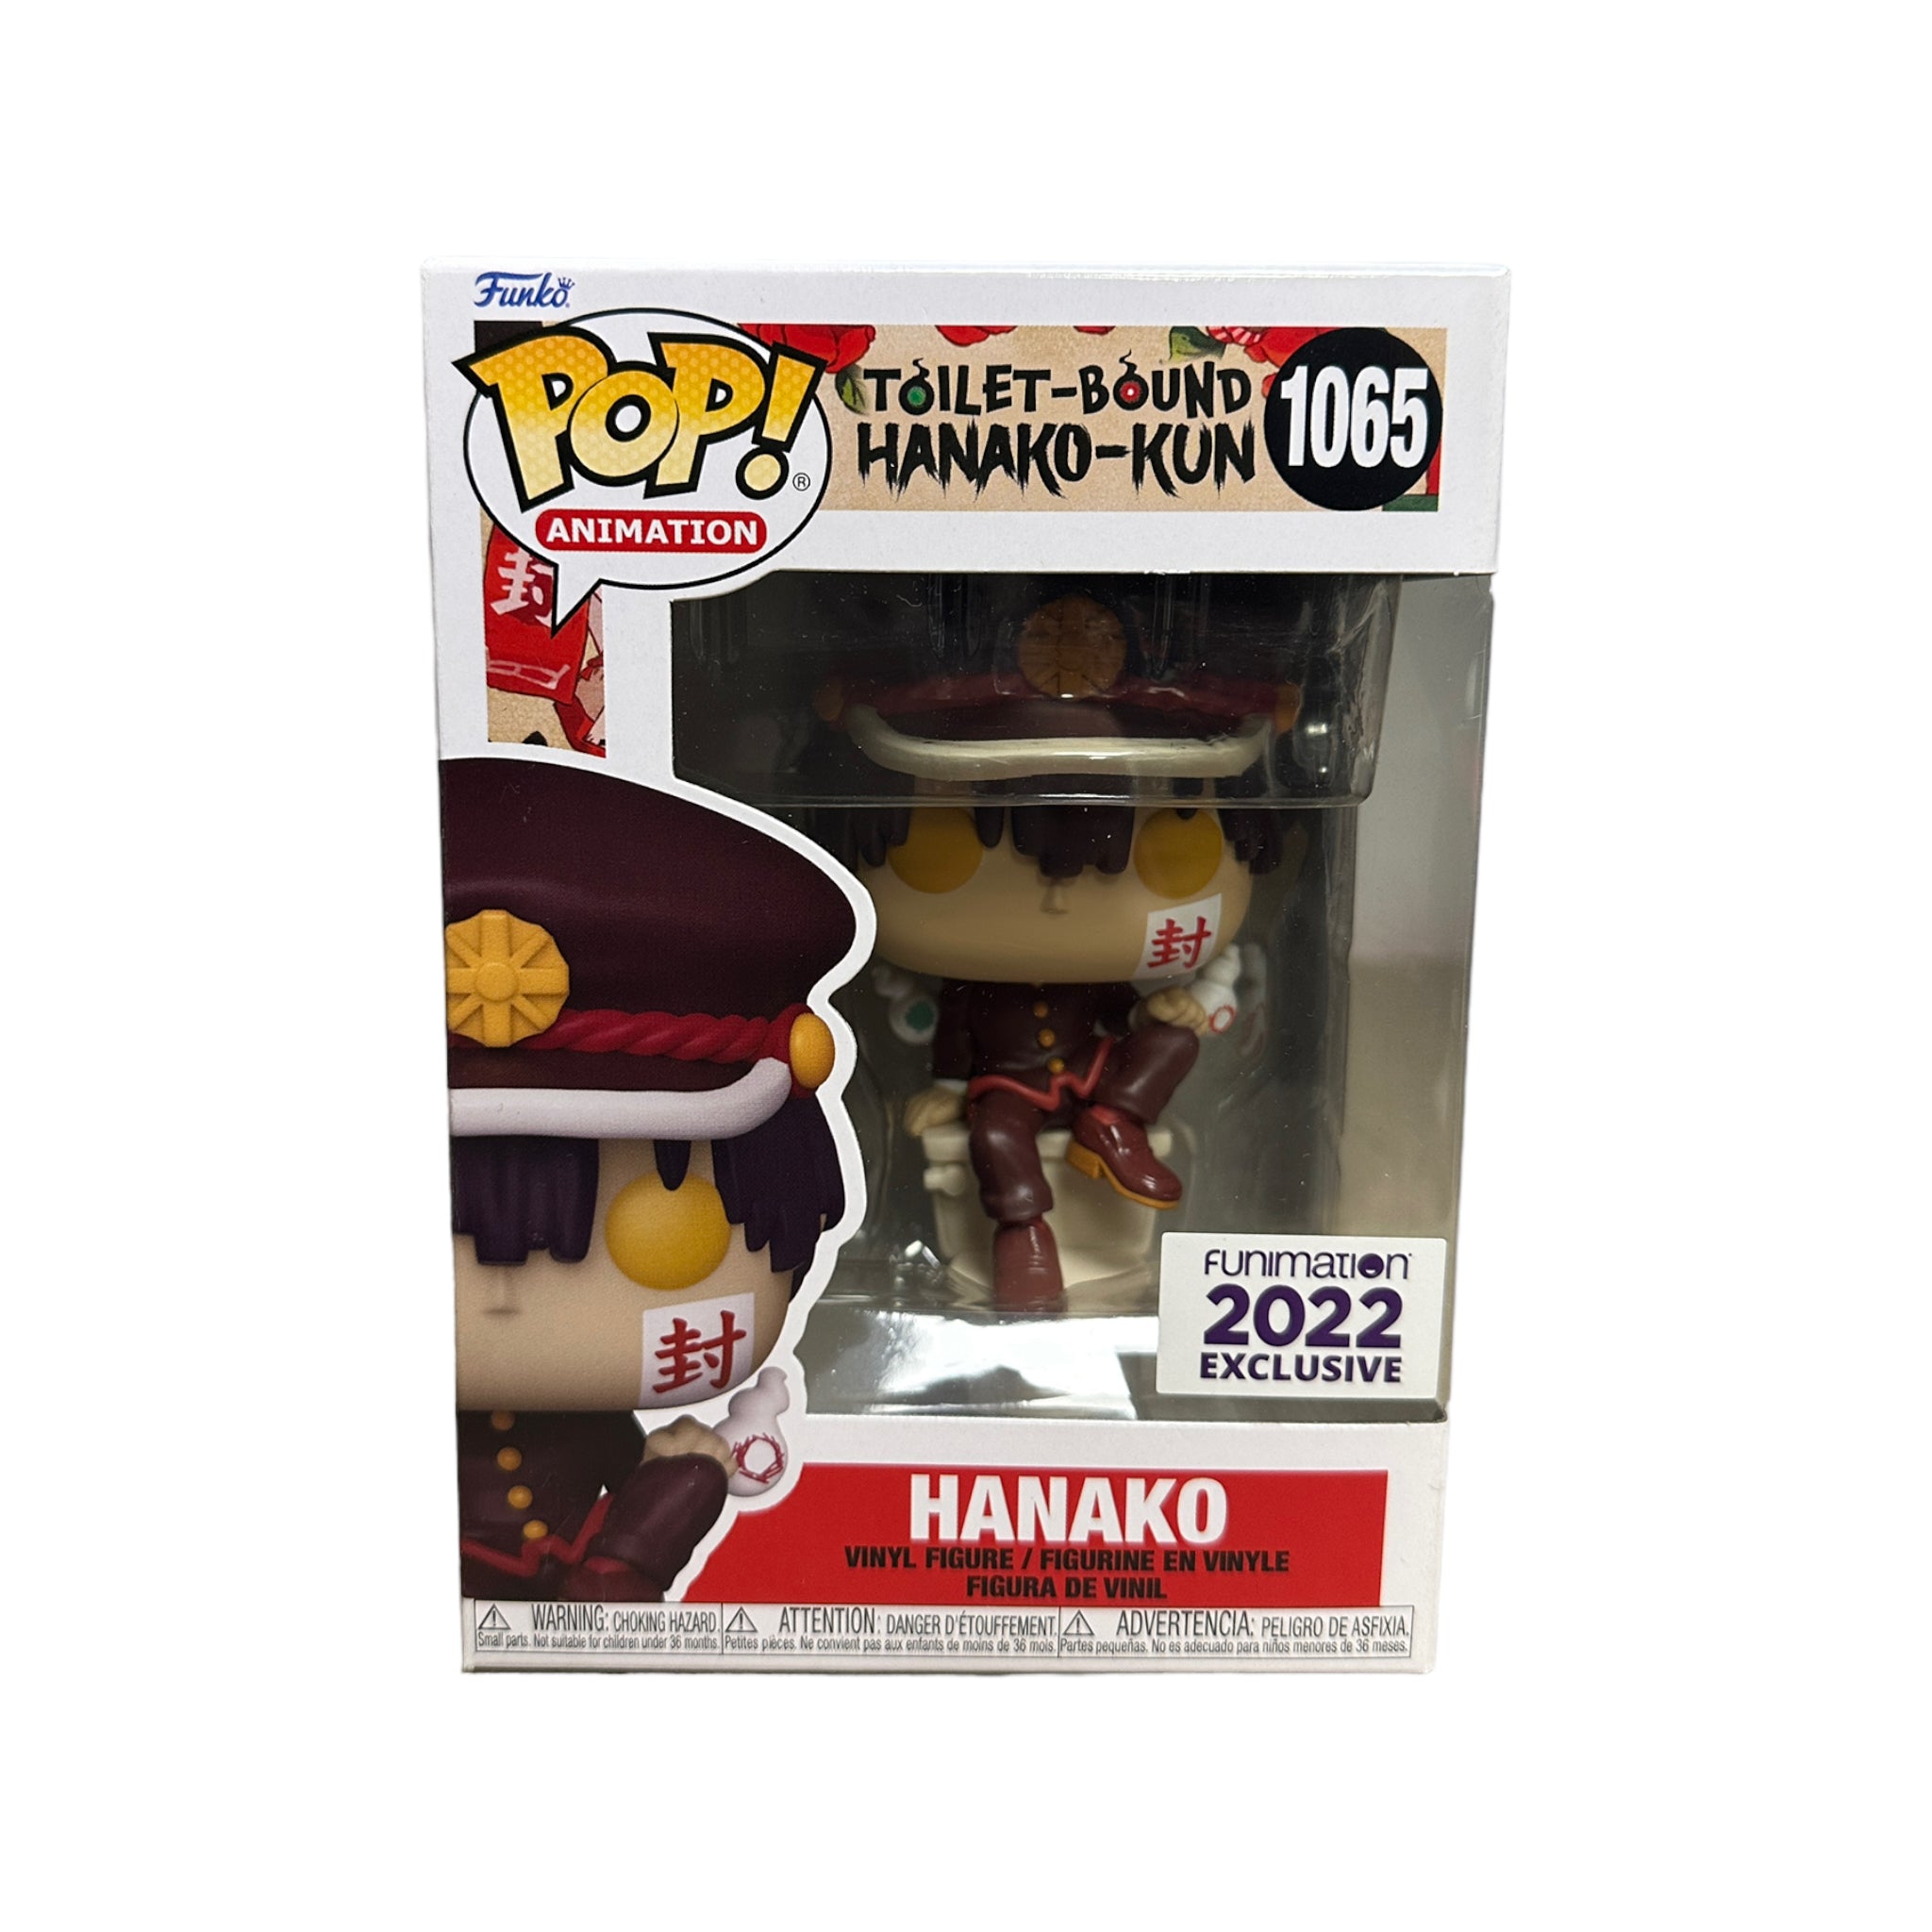 Hanako #1065 Funko Pop! - Toilet-Bound Hanako-Kun - Funimation 2022 Exclusive - Condition 8.5/10